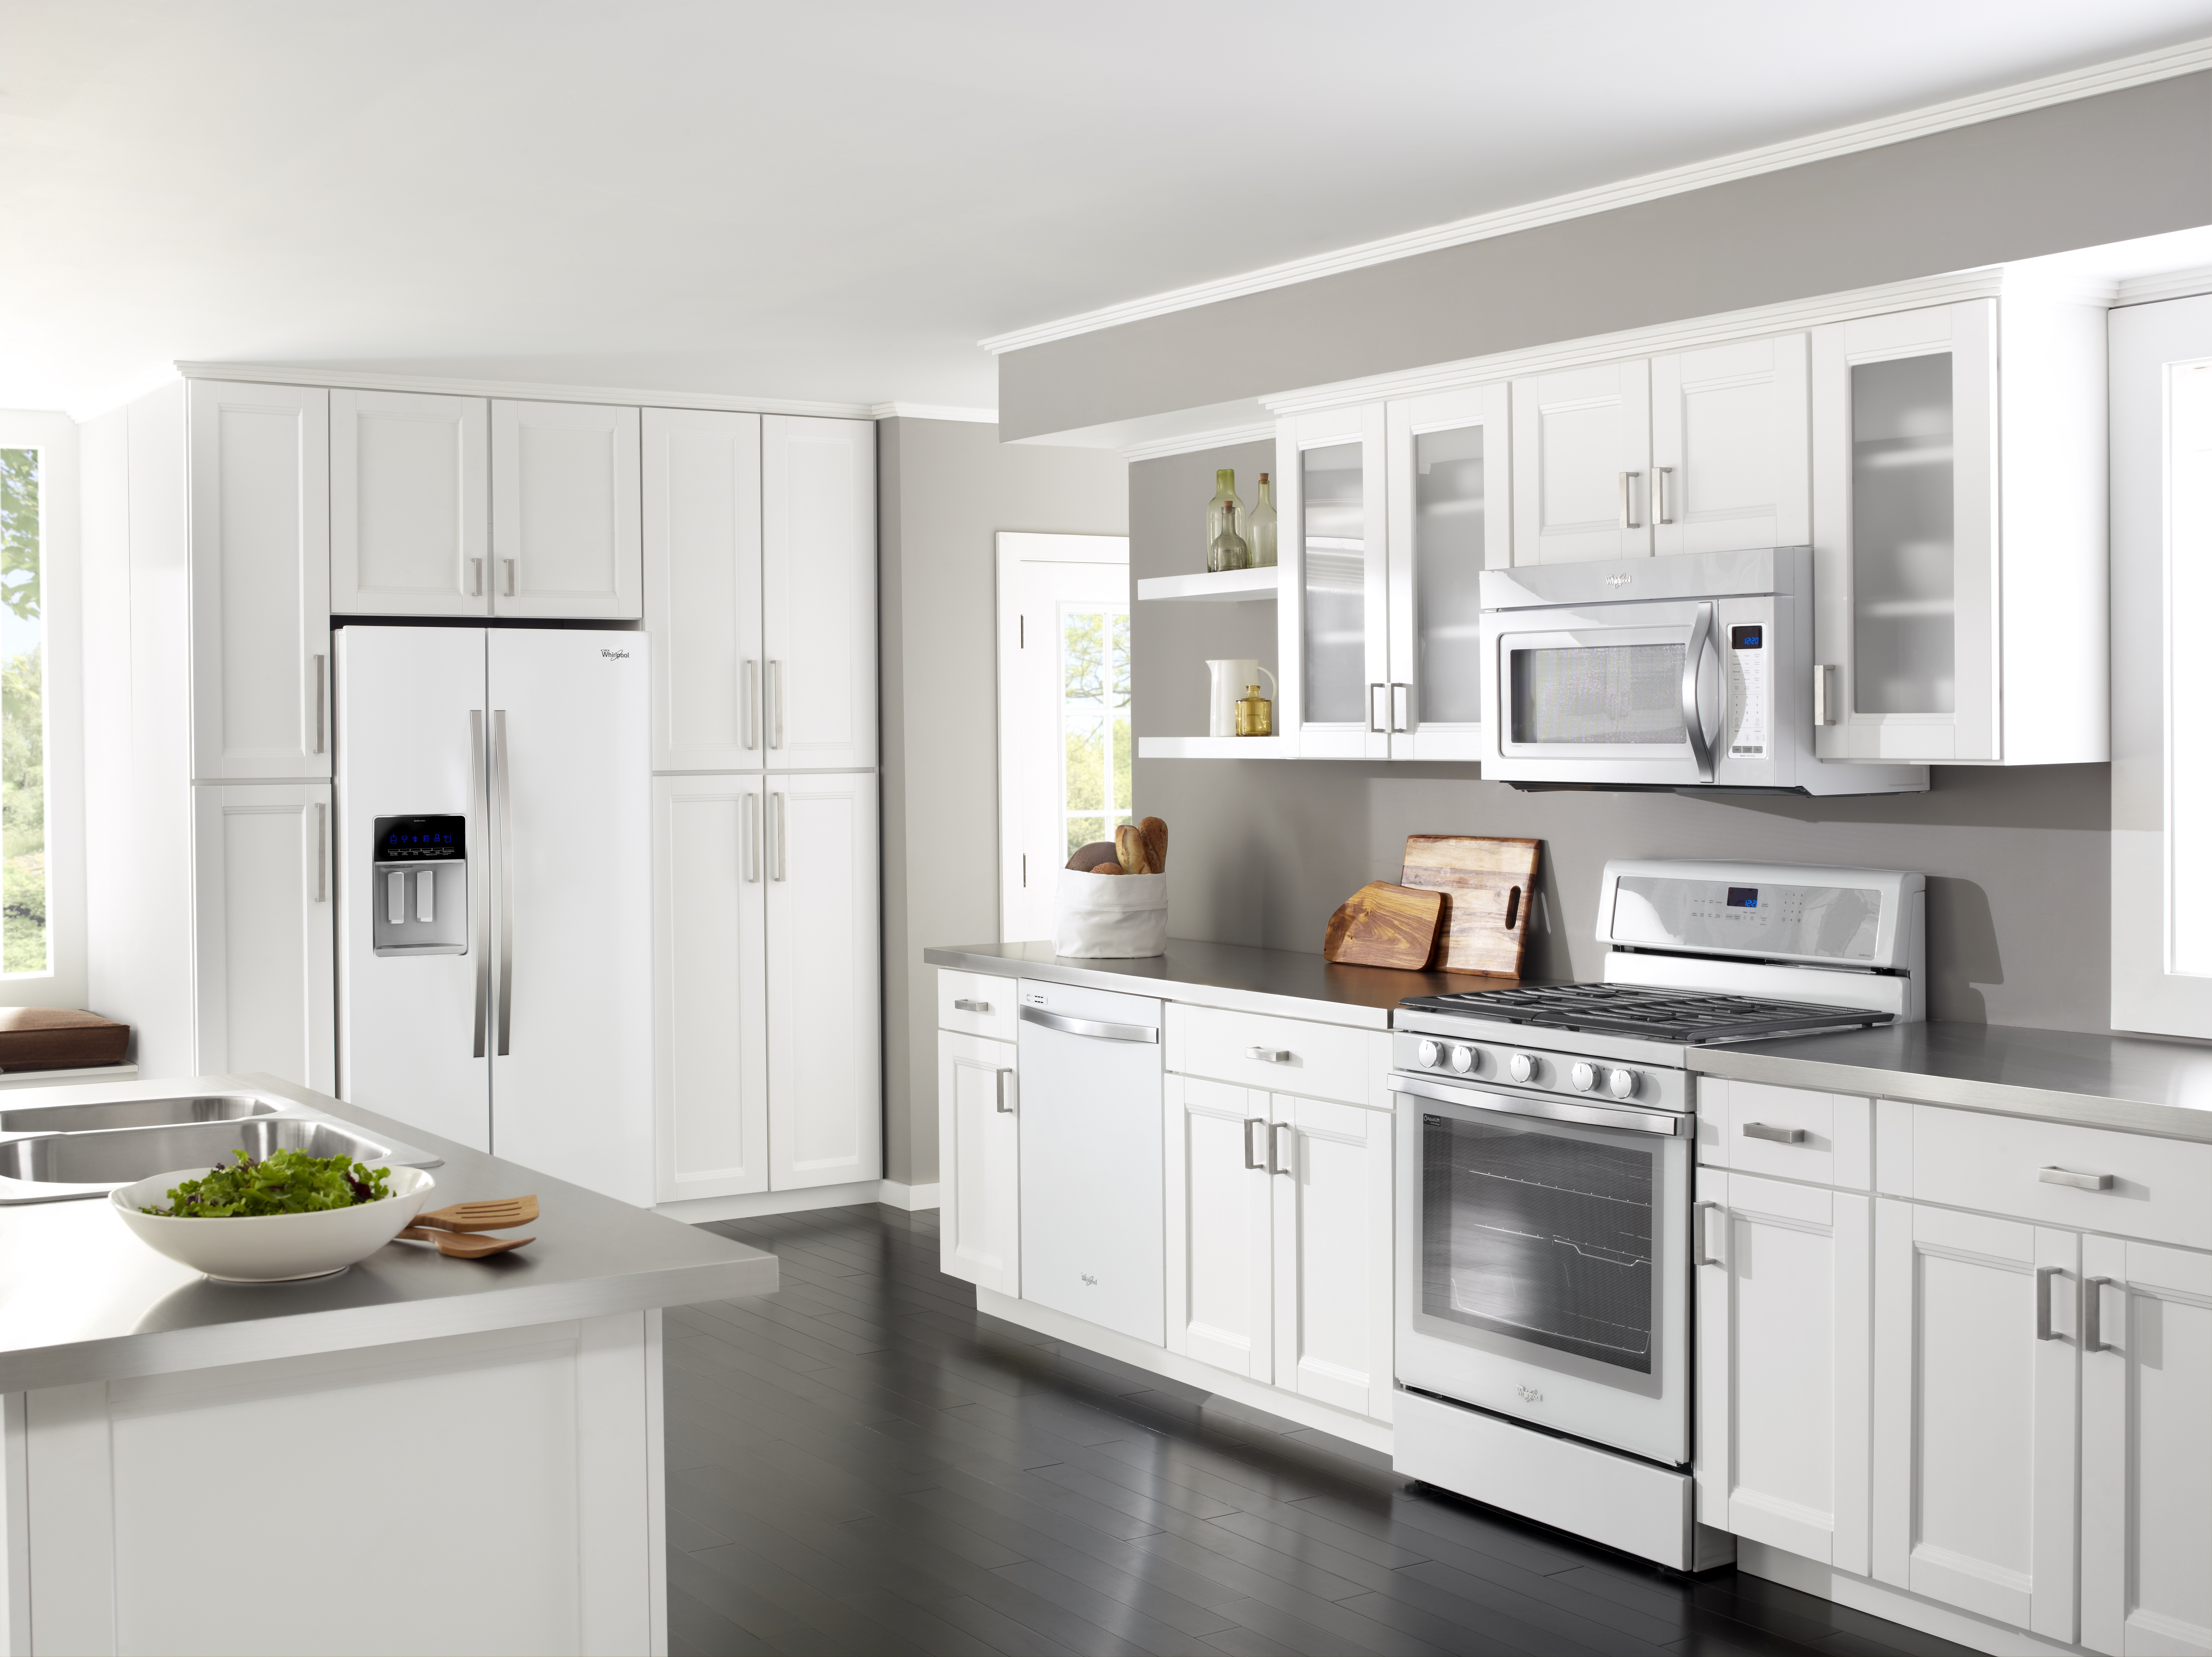  white kitchen cabinets and white appliances